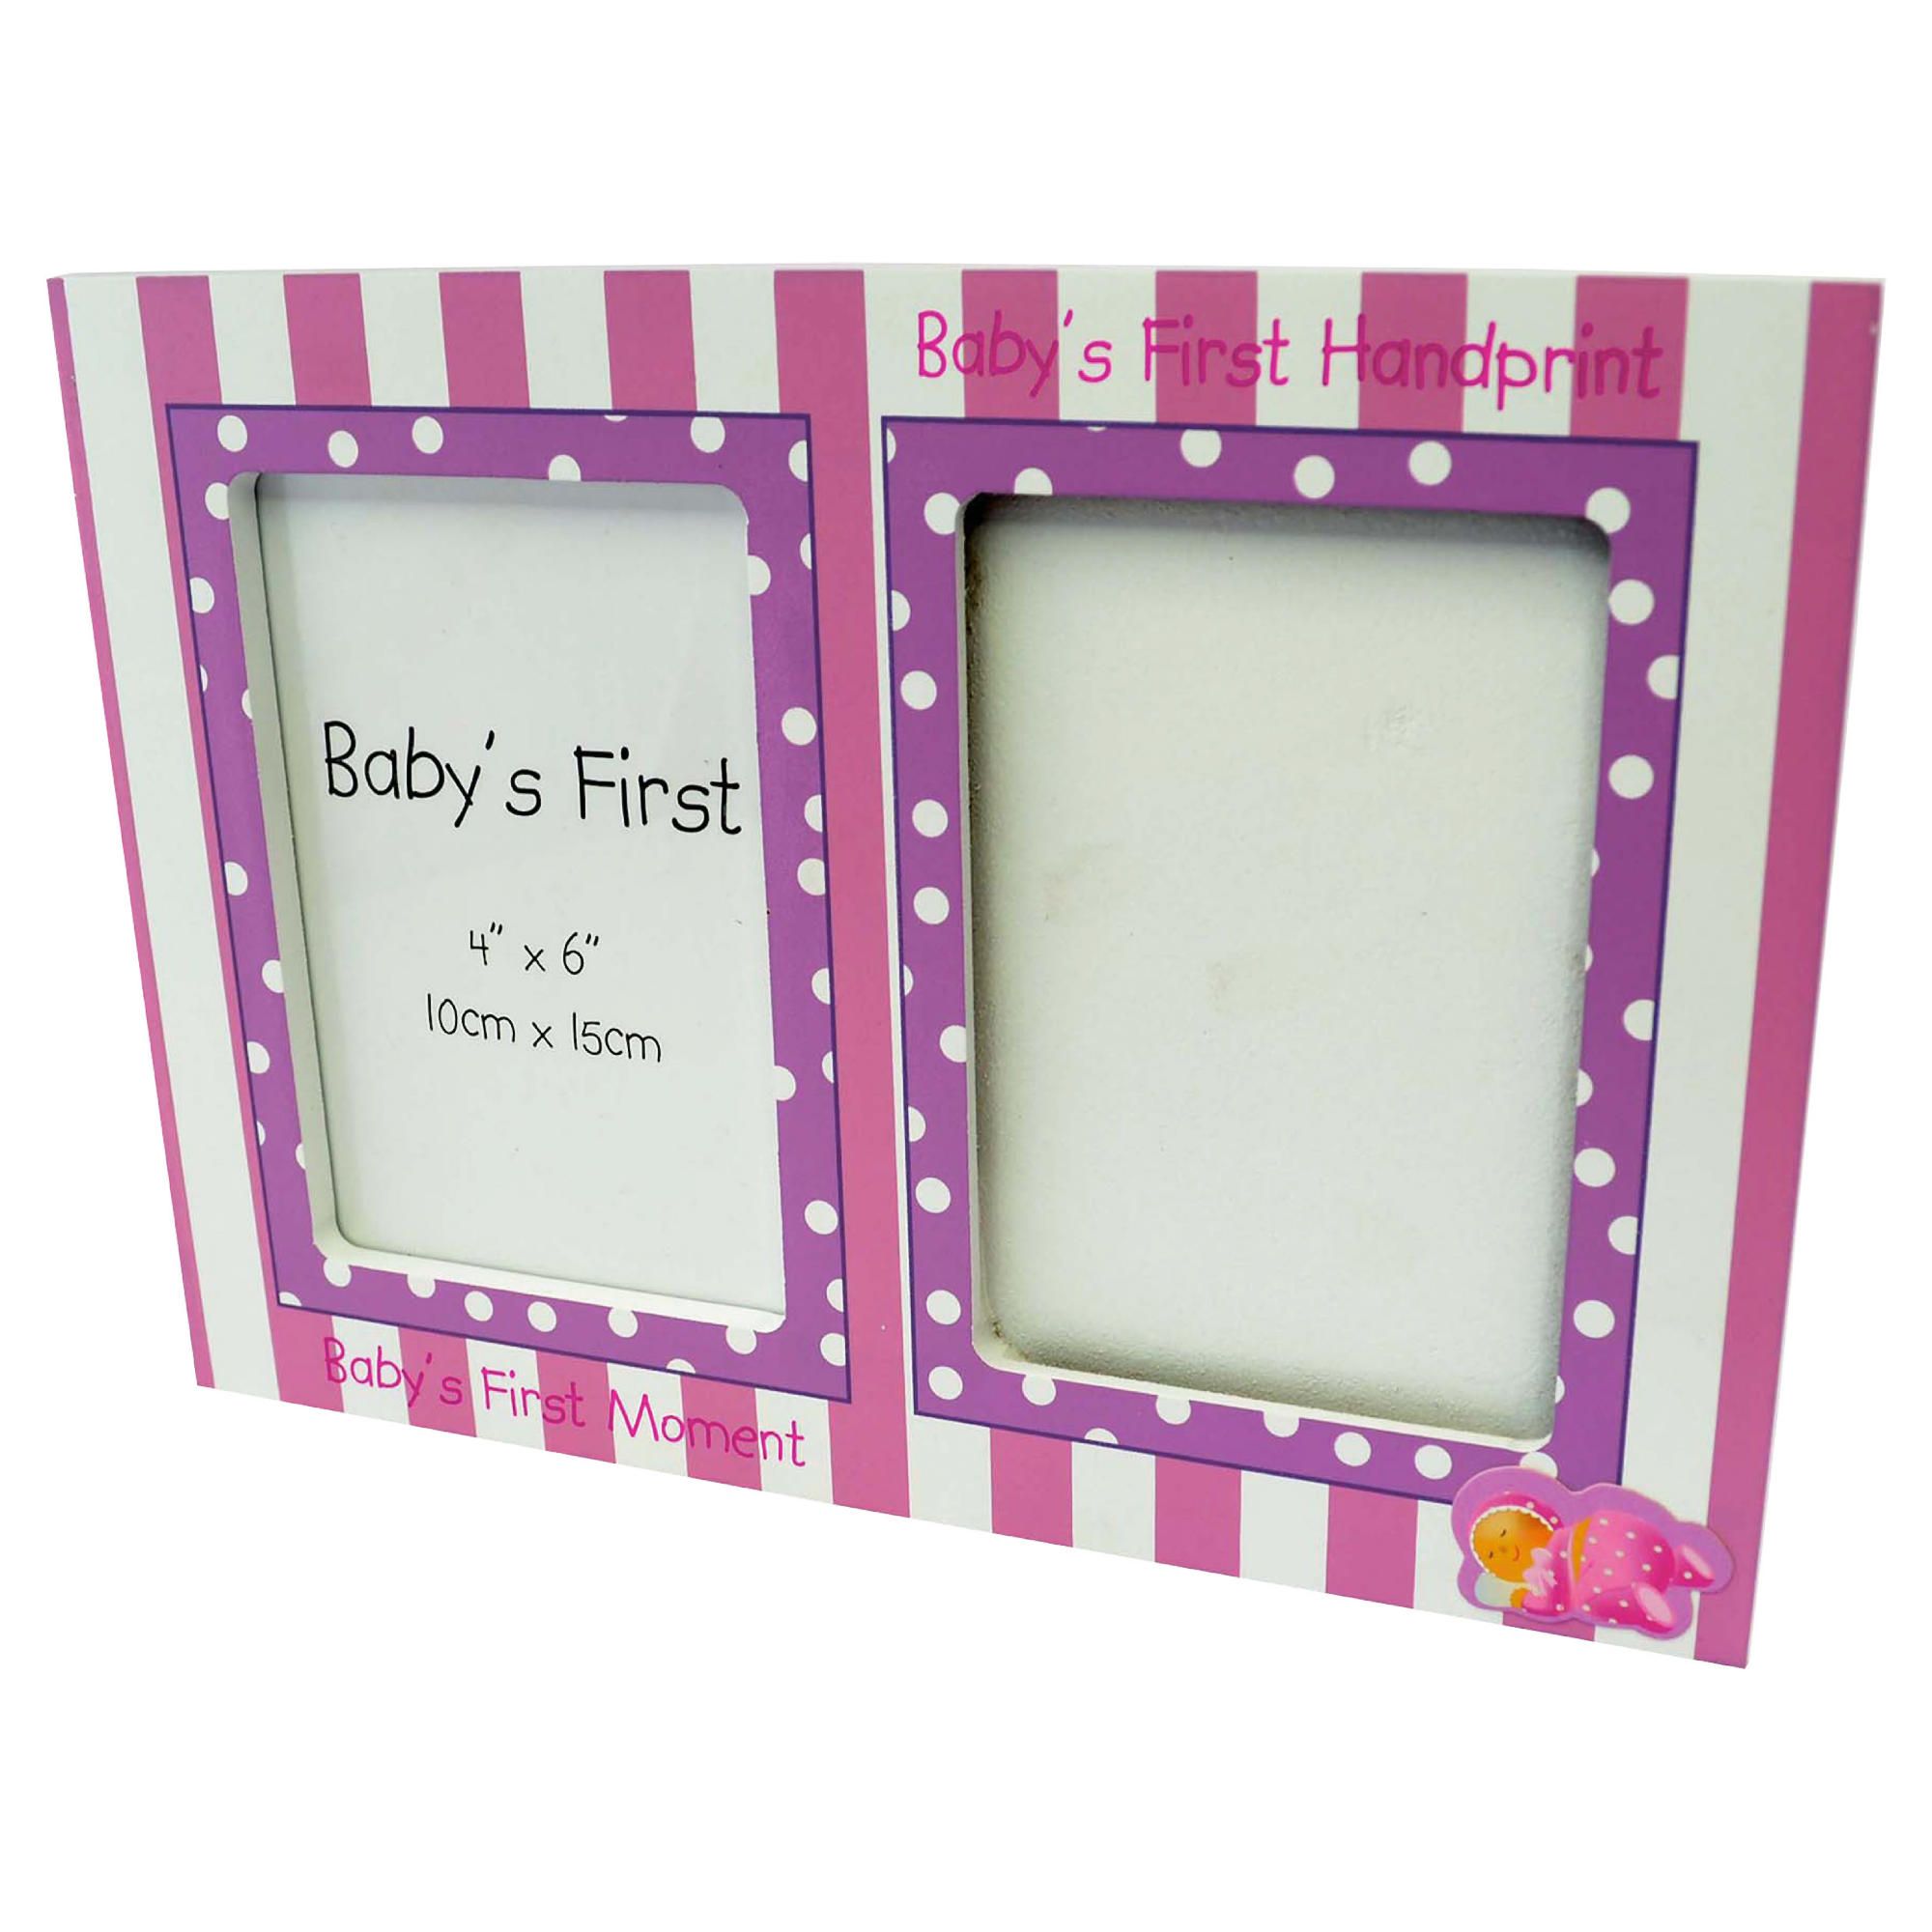 Baby Girls First Hand Print & Frame set